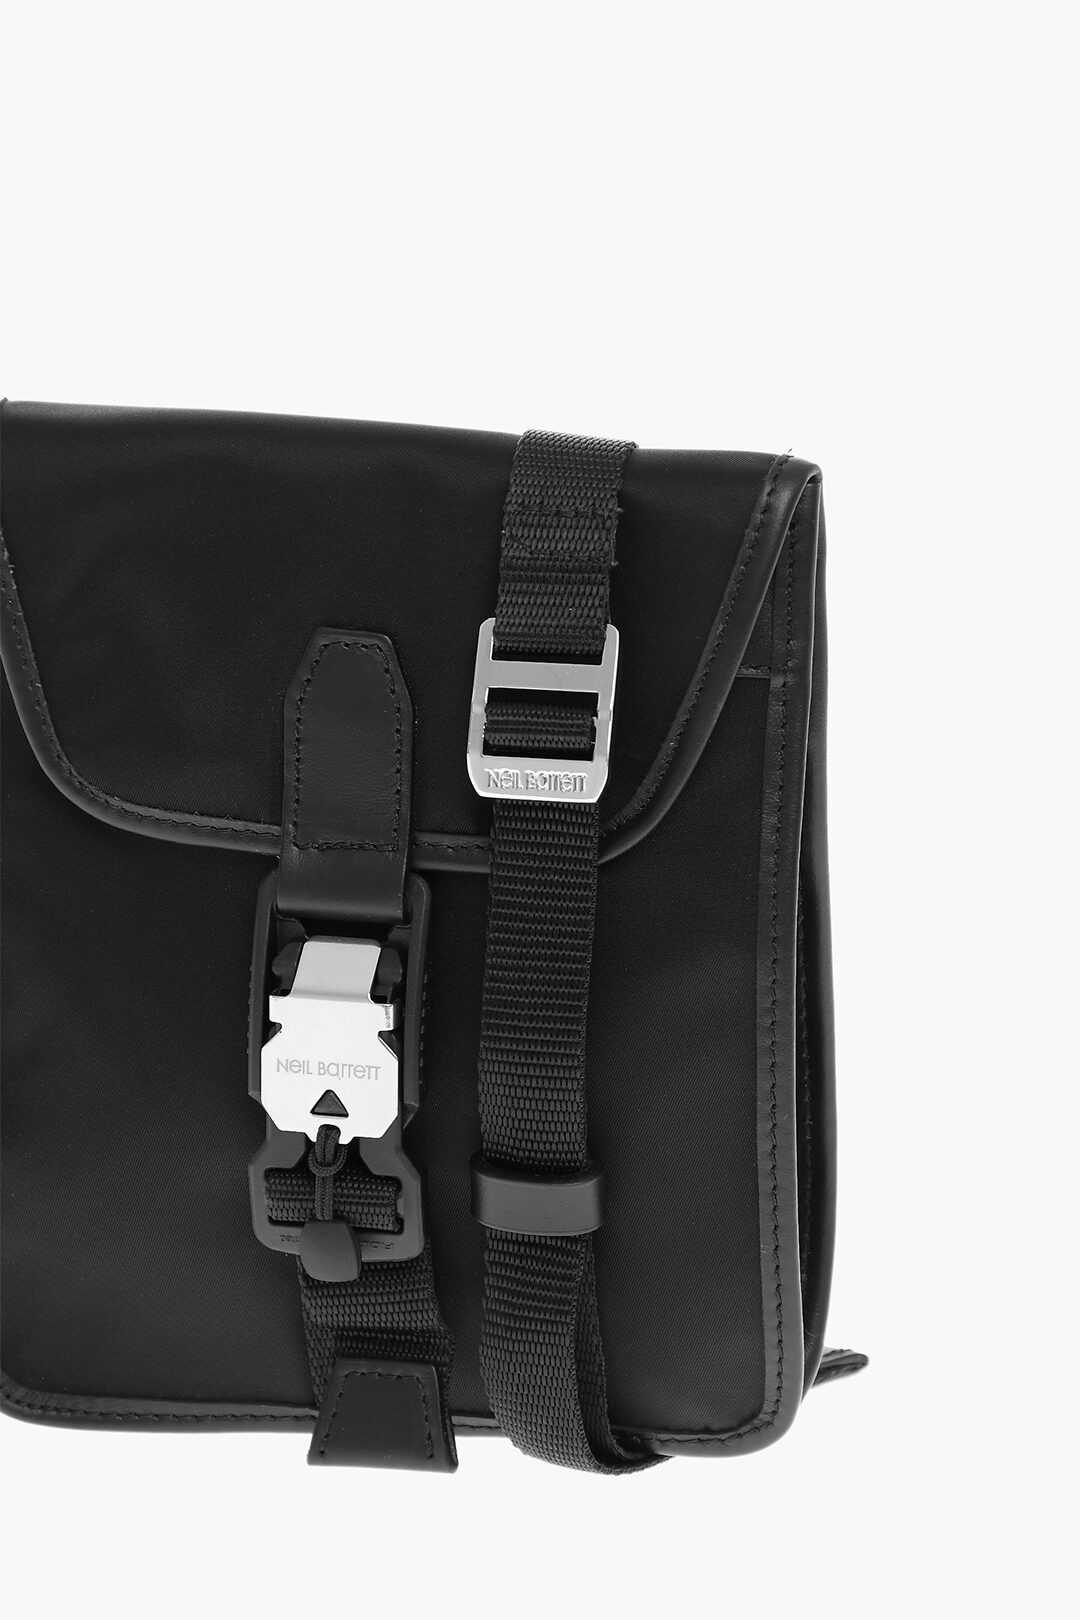 Neil Barrett Technical Fabric Crossbody Bag with Leather Details unisex ...